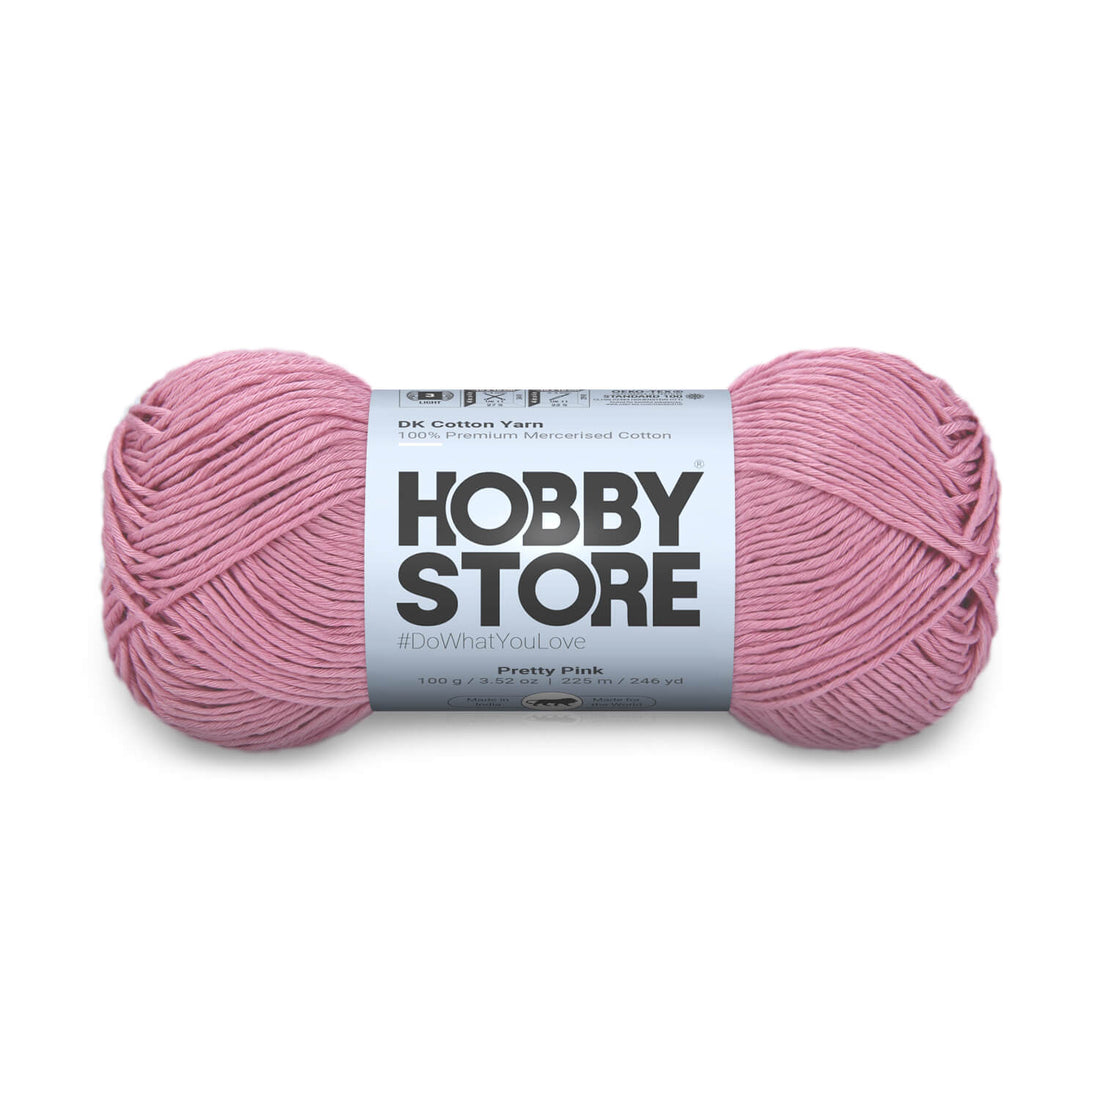 DK Mercerised Cotton Yarn by Hobby Store - Pretty Pink - 338